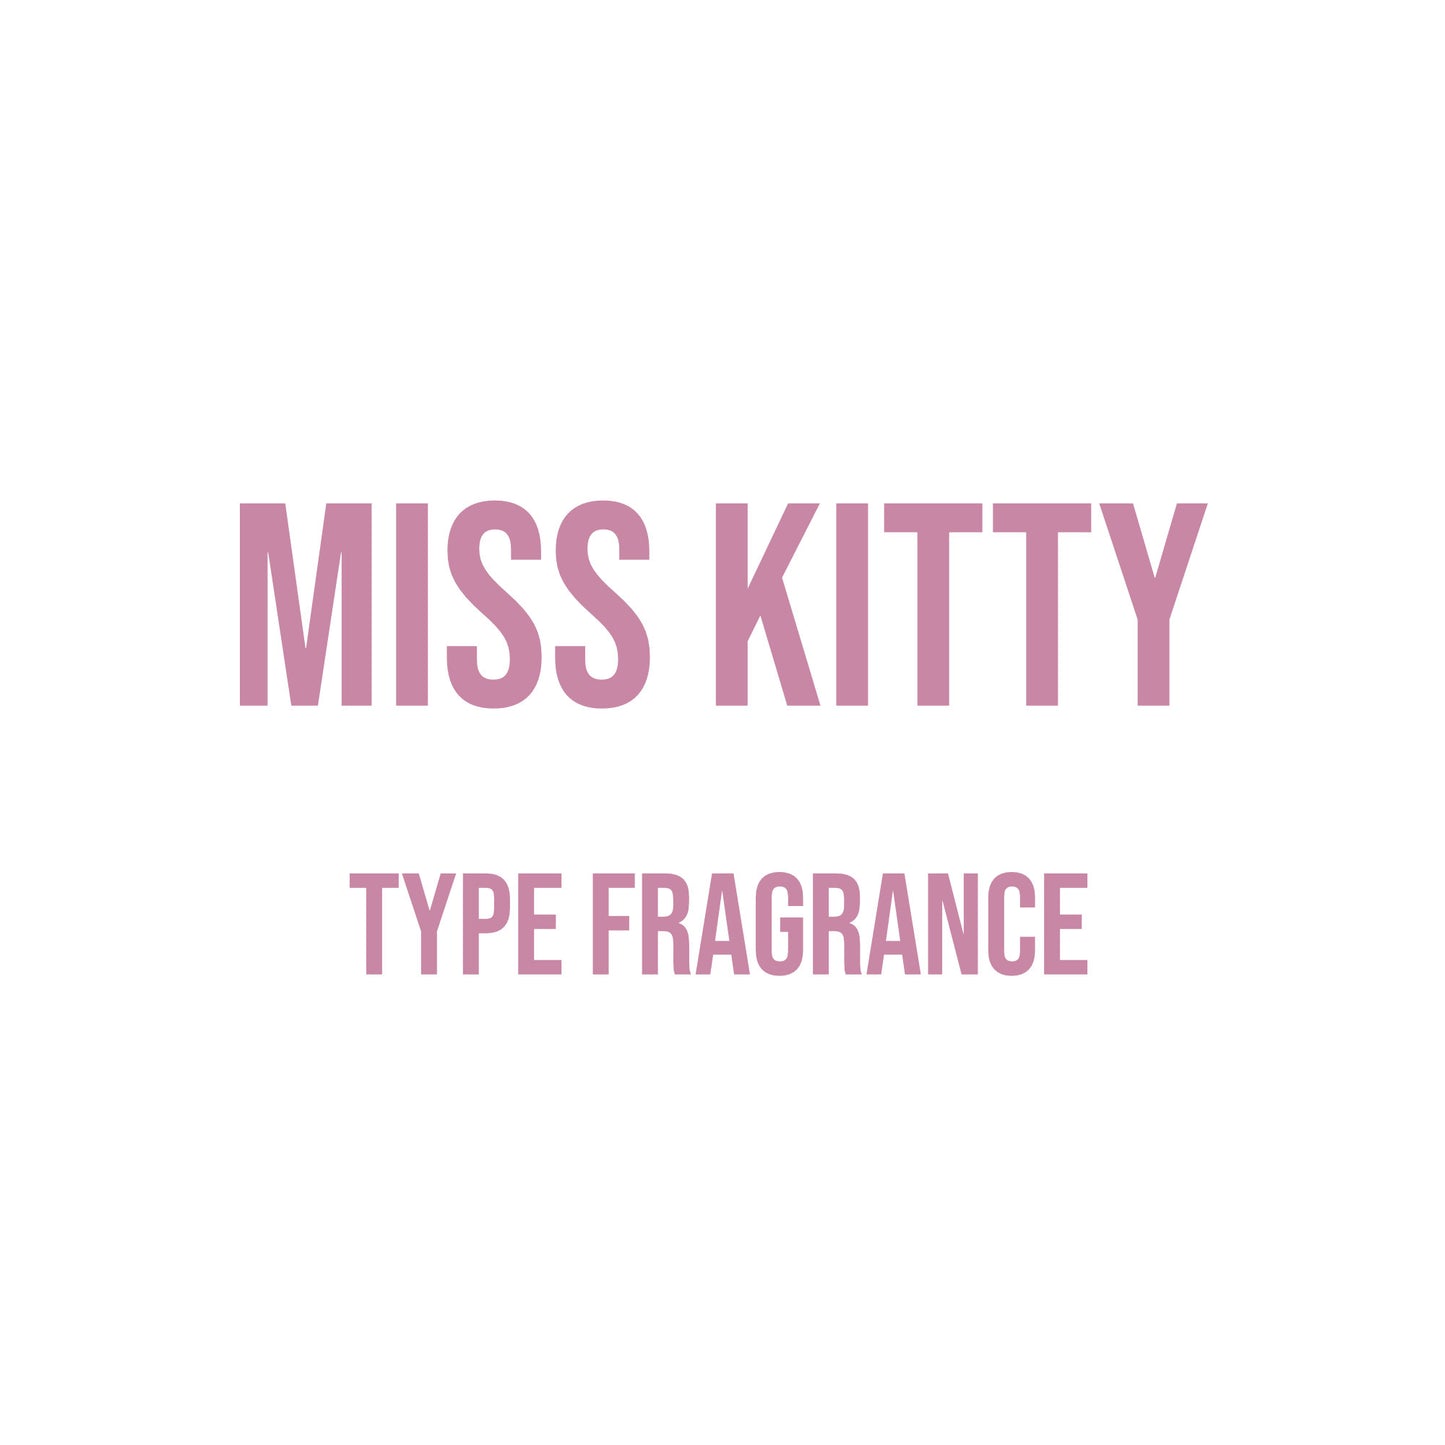 Miss Kitty Type Fragrance